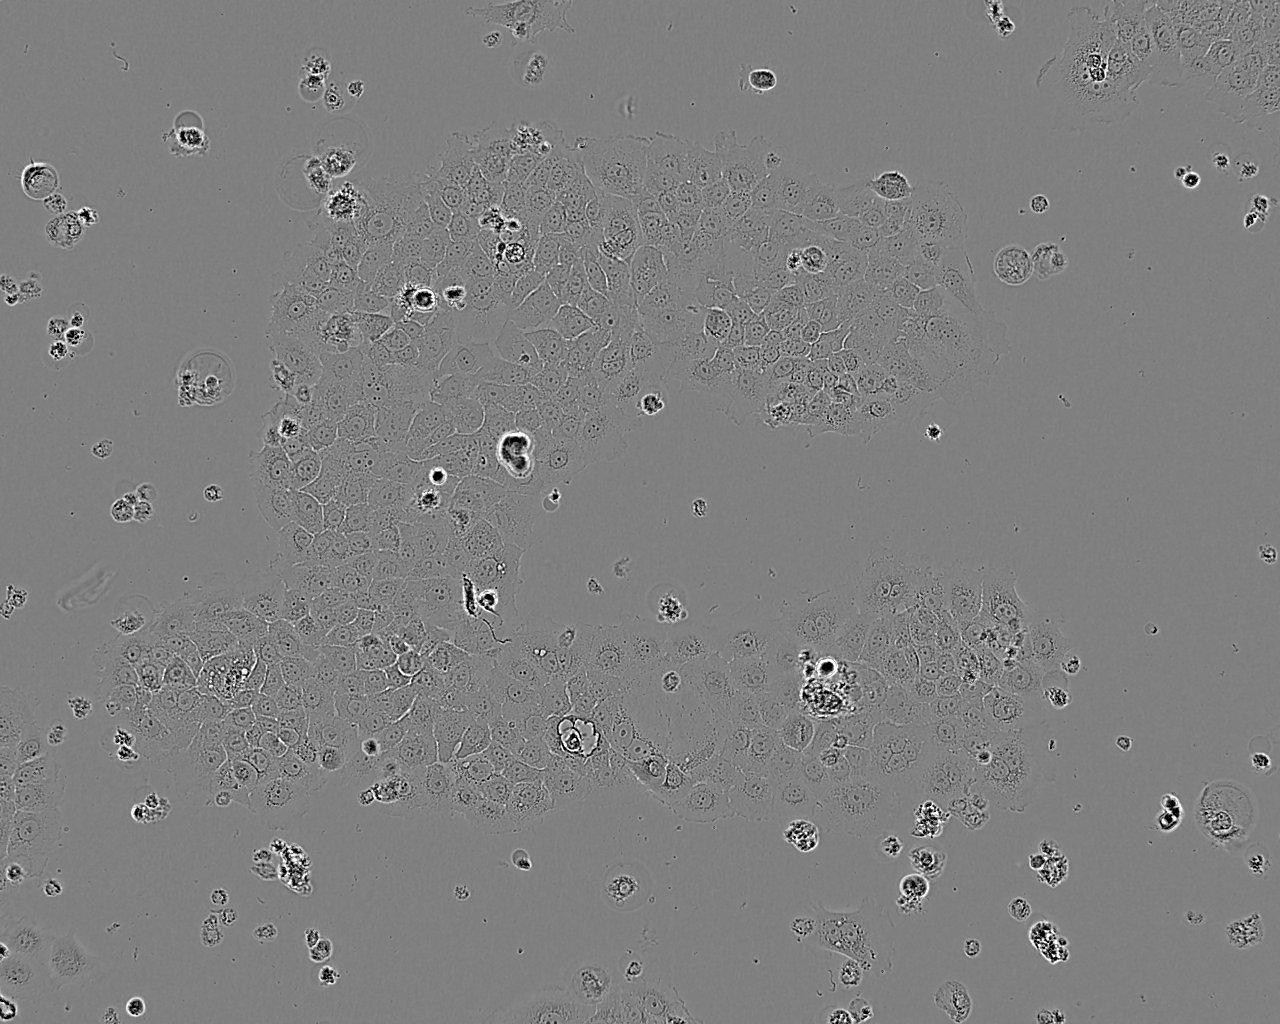 DLM8 epithelioid cellsC3H小鼠骨肉瘤细胞系,DLM8 epithelioid cells